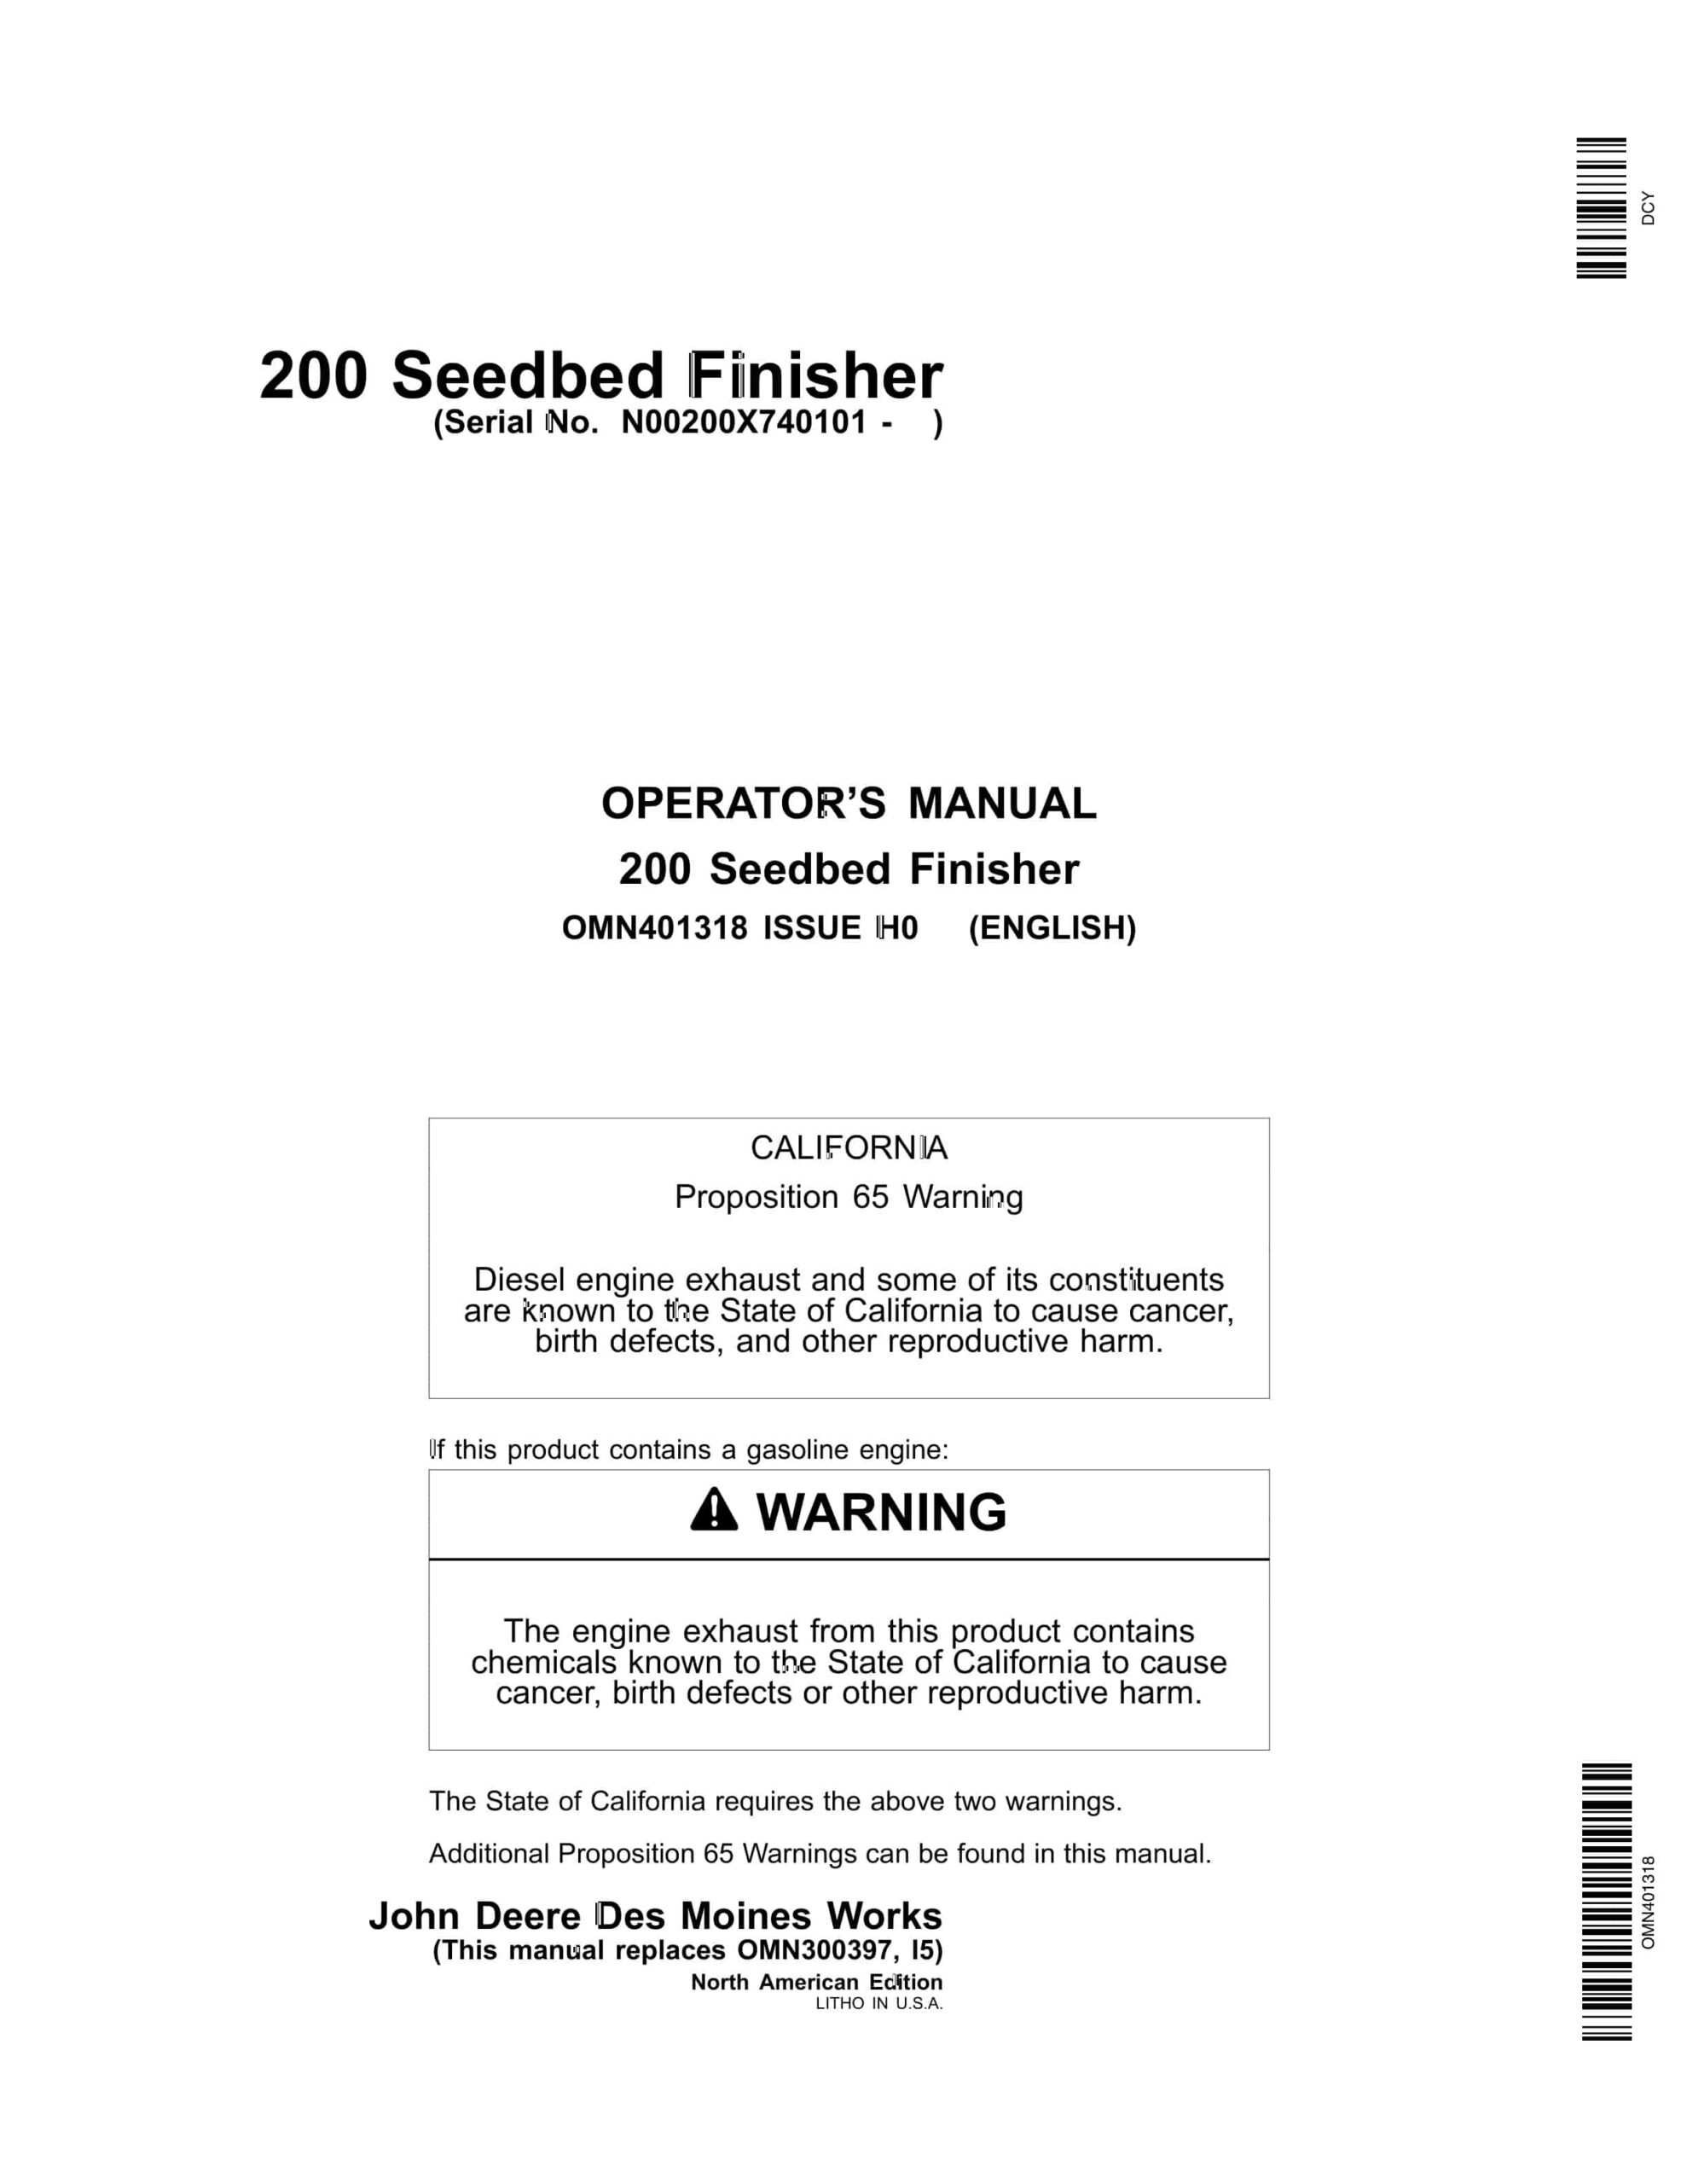 John Deere 200 Seedbed Finisher Operator Manual OMN401318-1